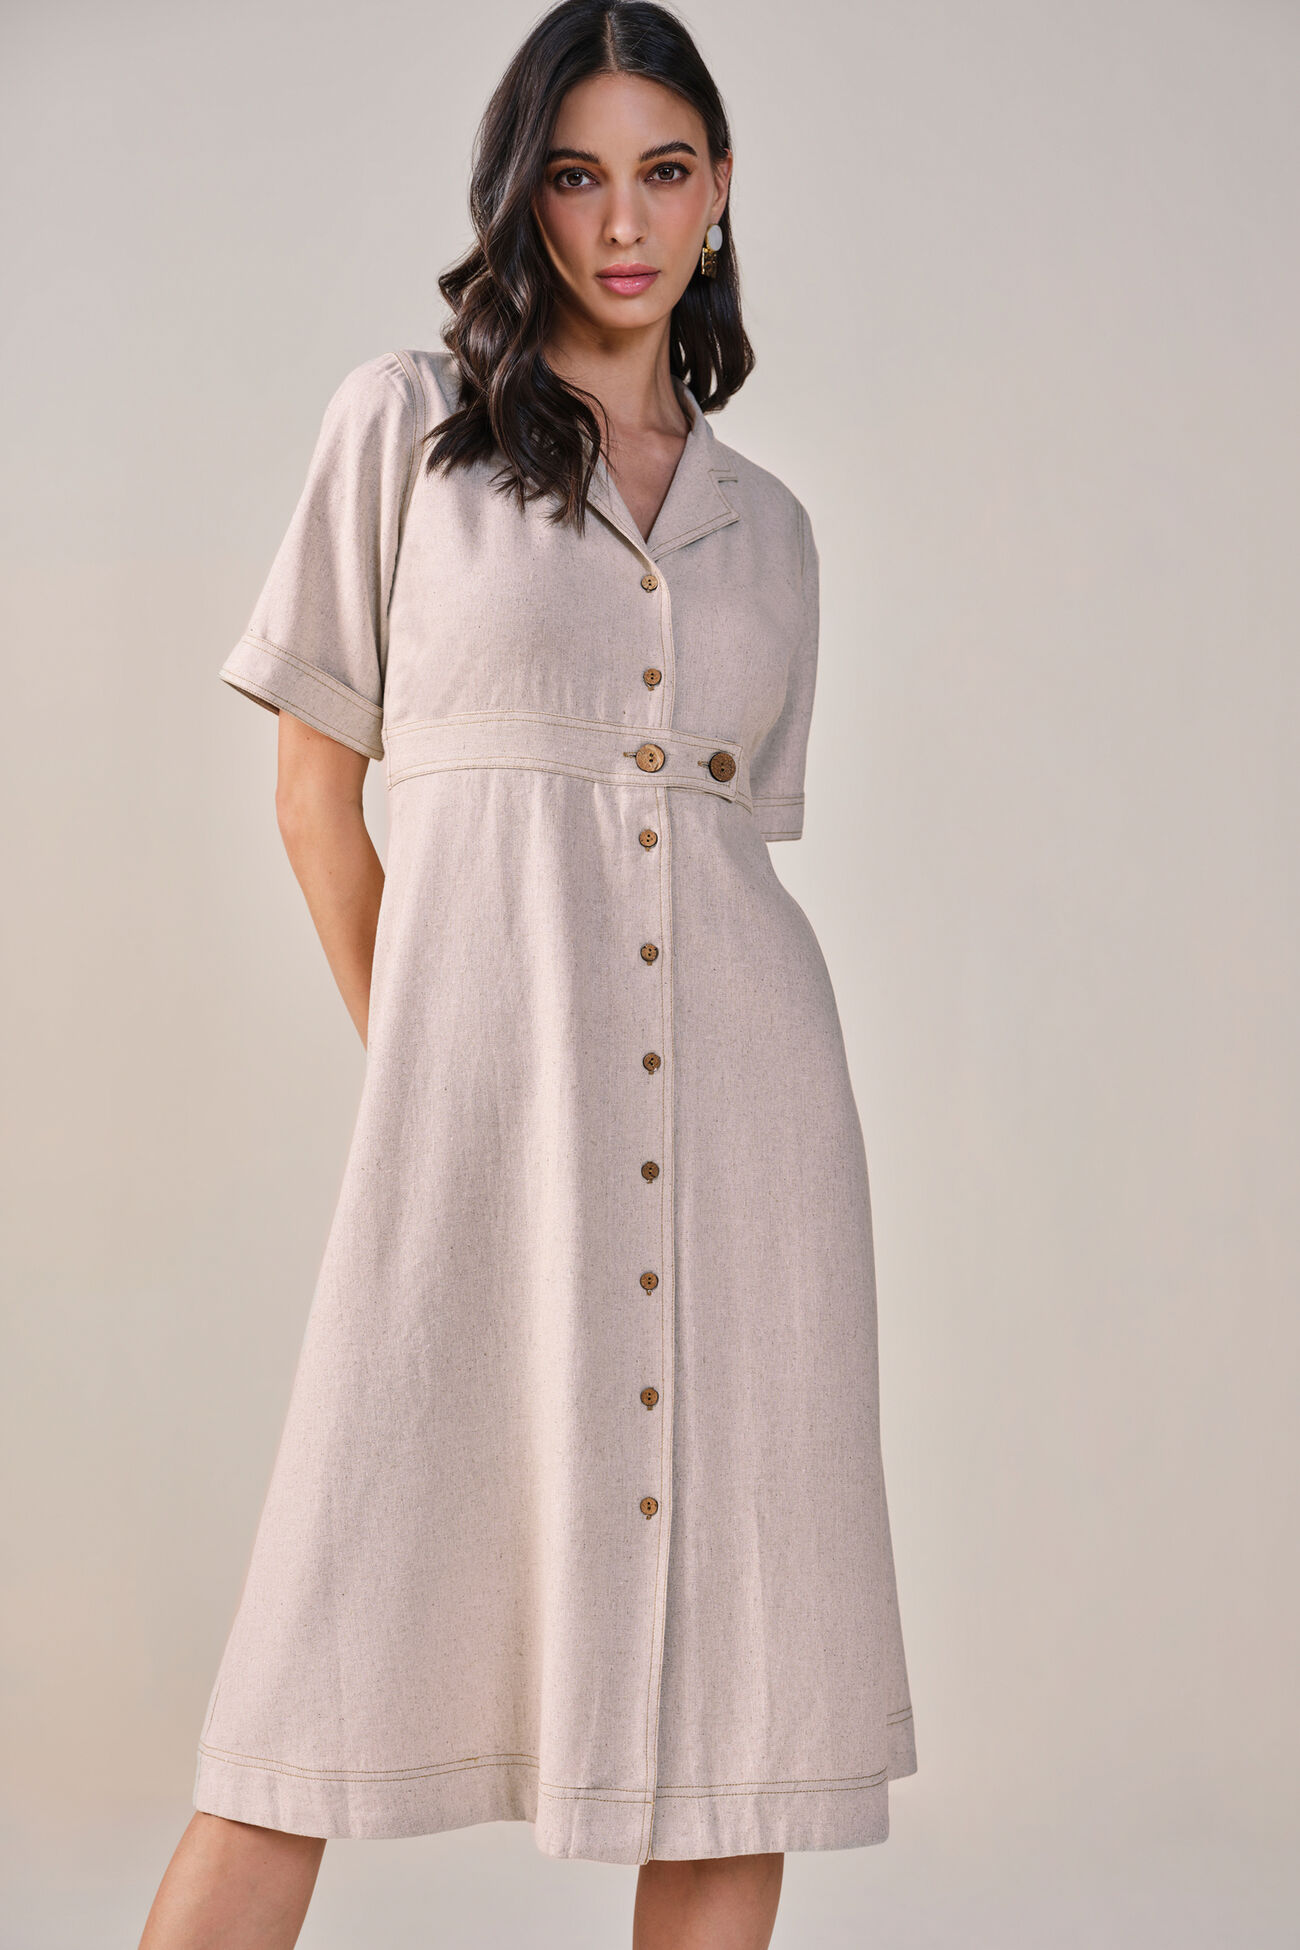 Urbanic Viscose Linen Blend Dress, Beige, image 5